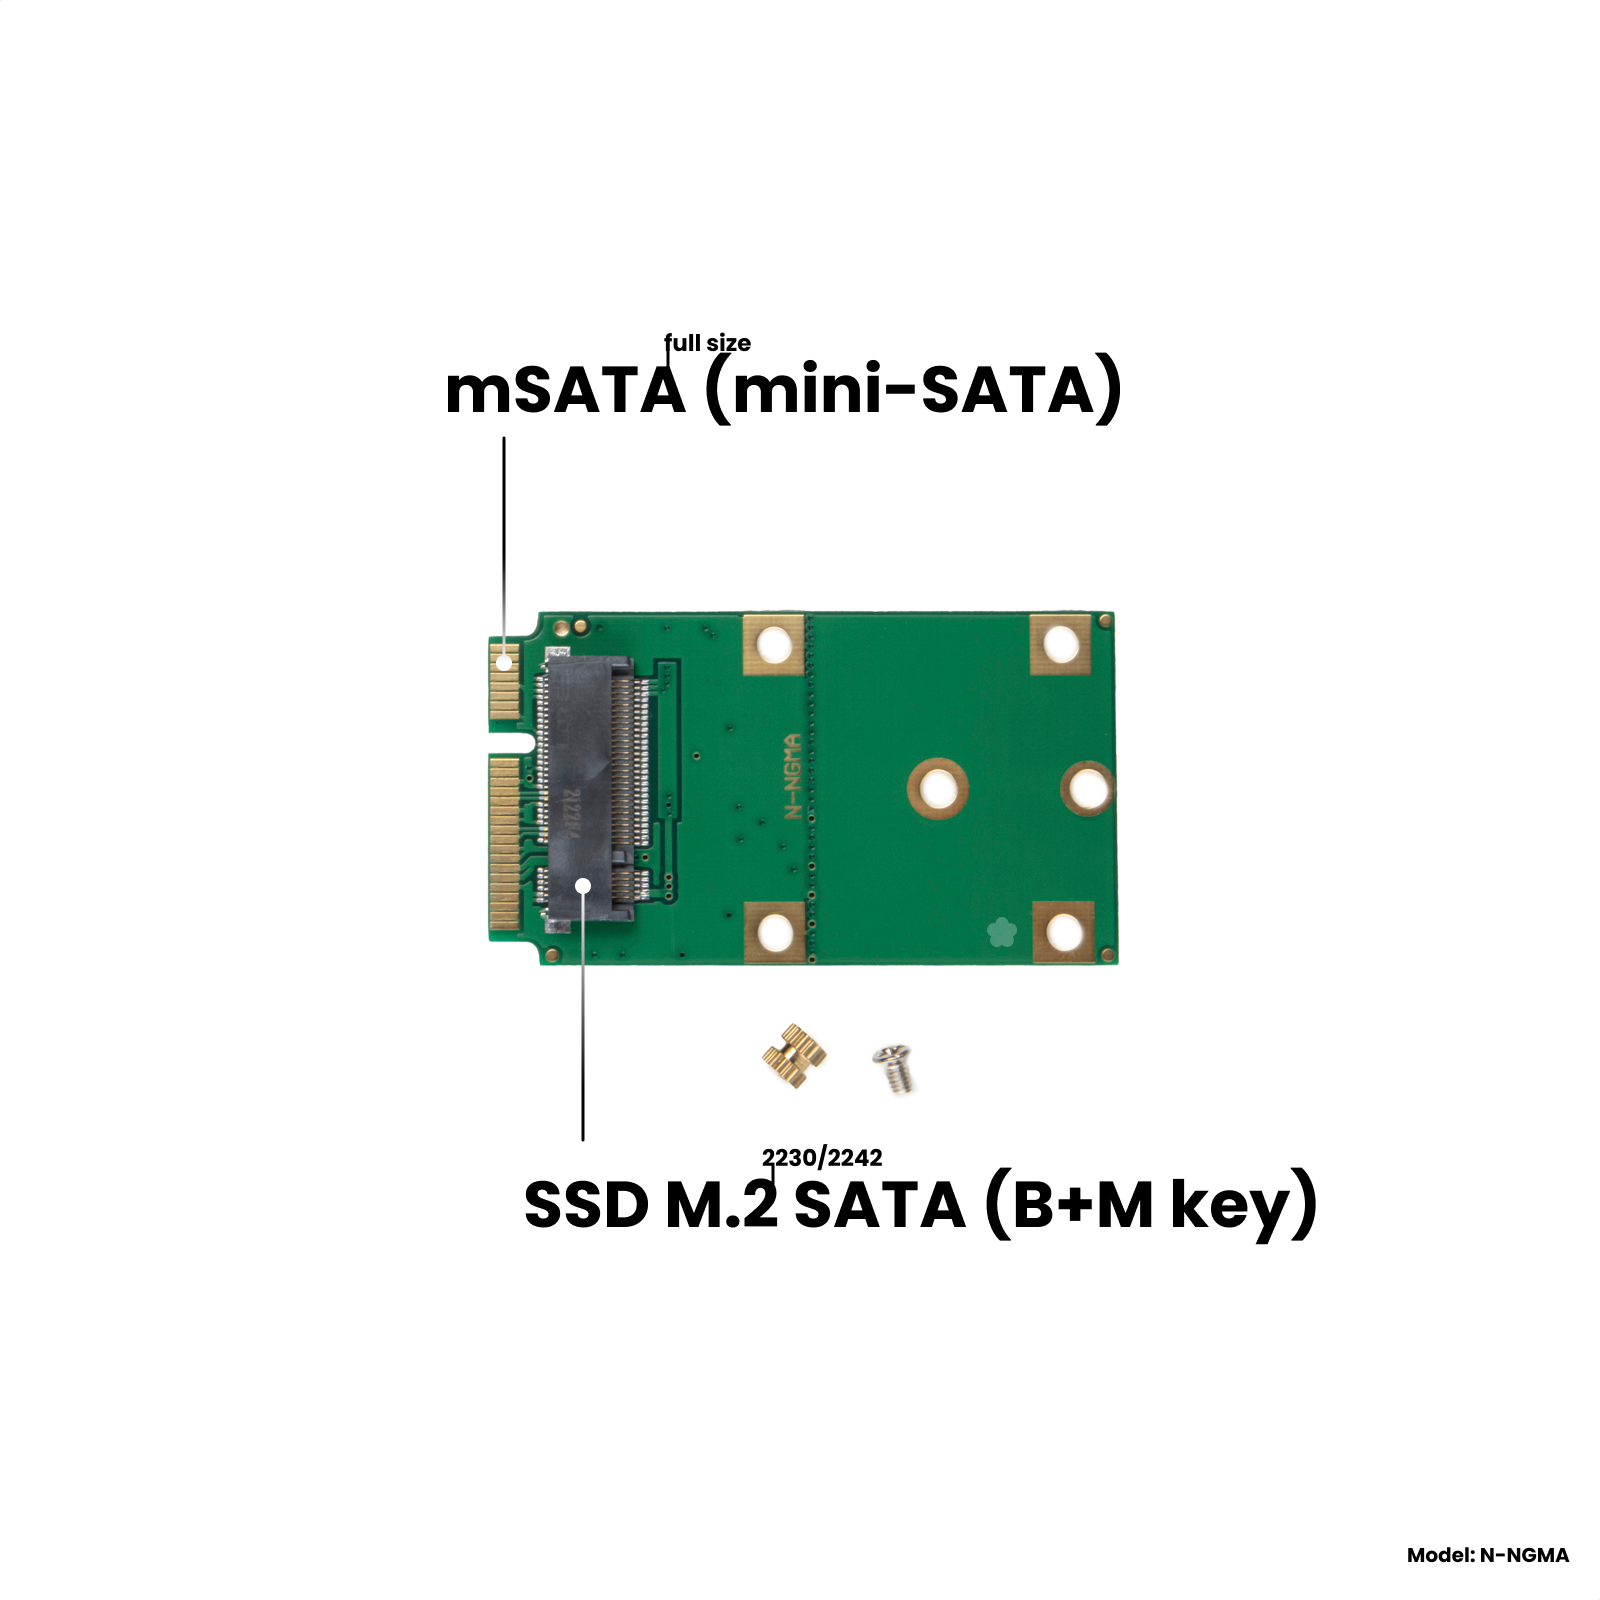 Адаптер-переходник для установки SSD M.2 2230/2242 SATA в разъем mSATA зеленый NFHK N-NGMA